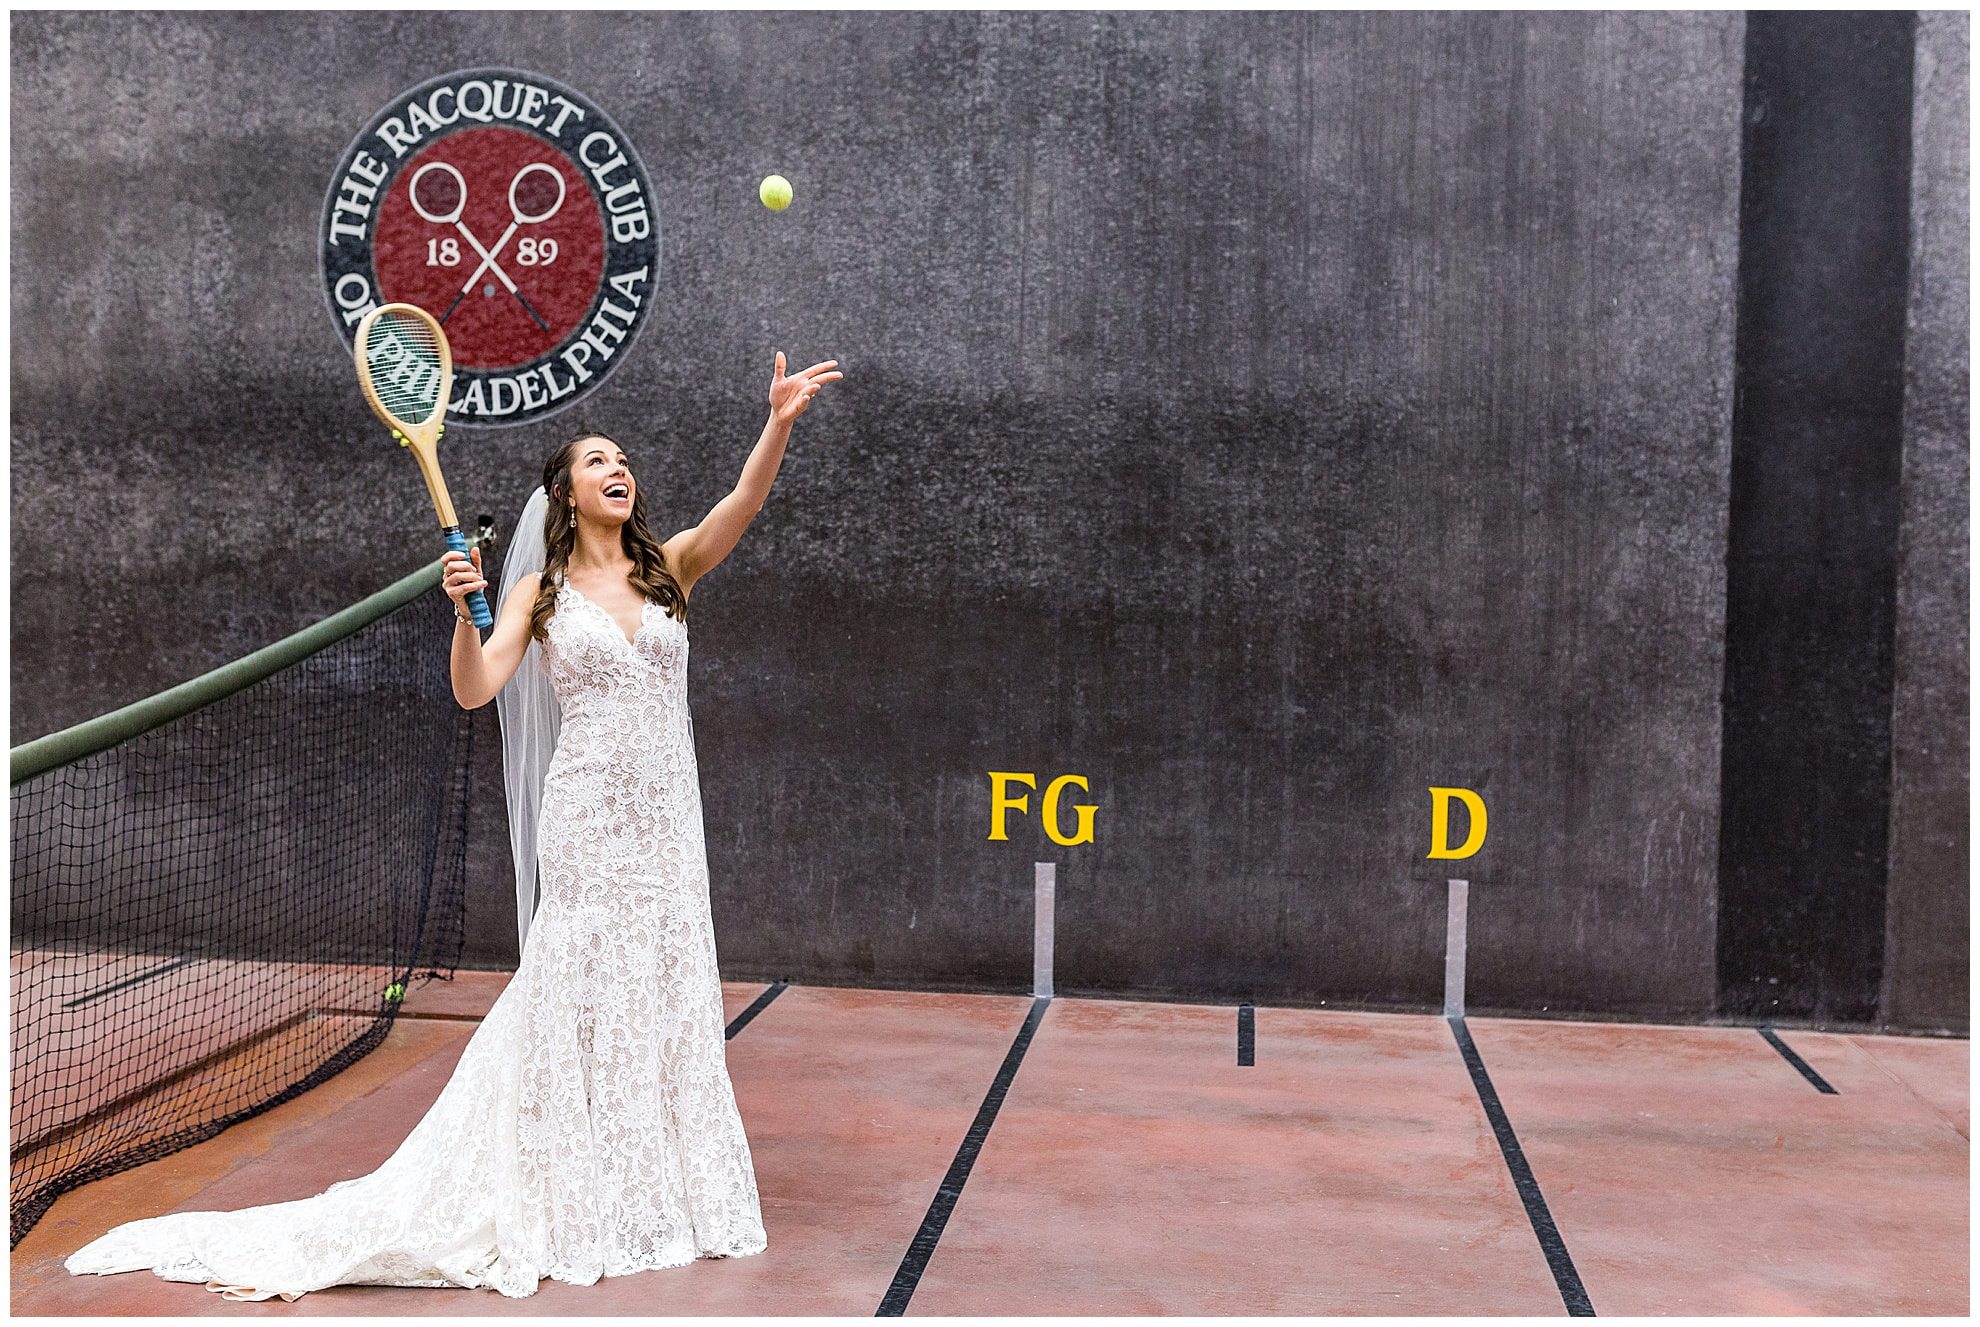 Bride swinging racquet on court at Racquet Club of Philadelphia winter holiday wedding